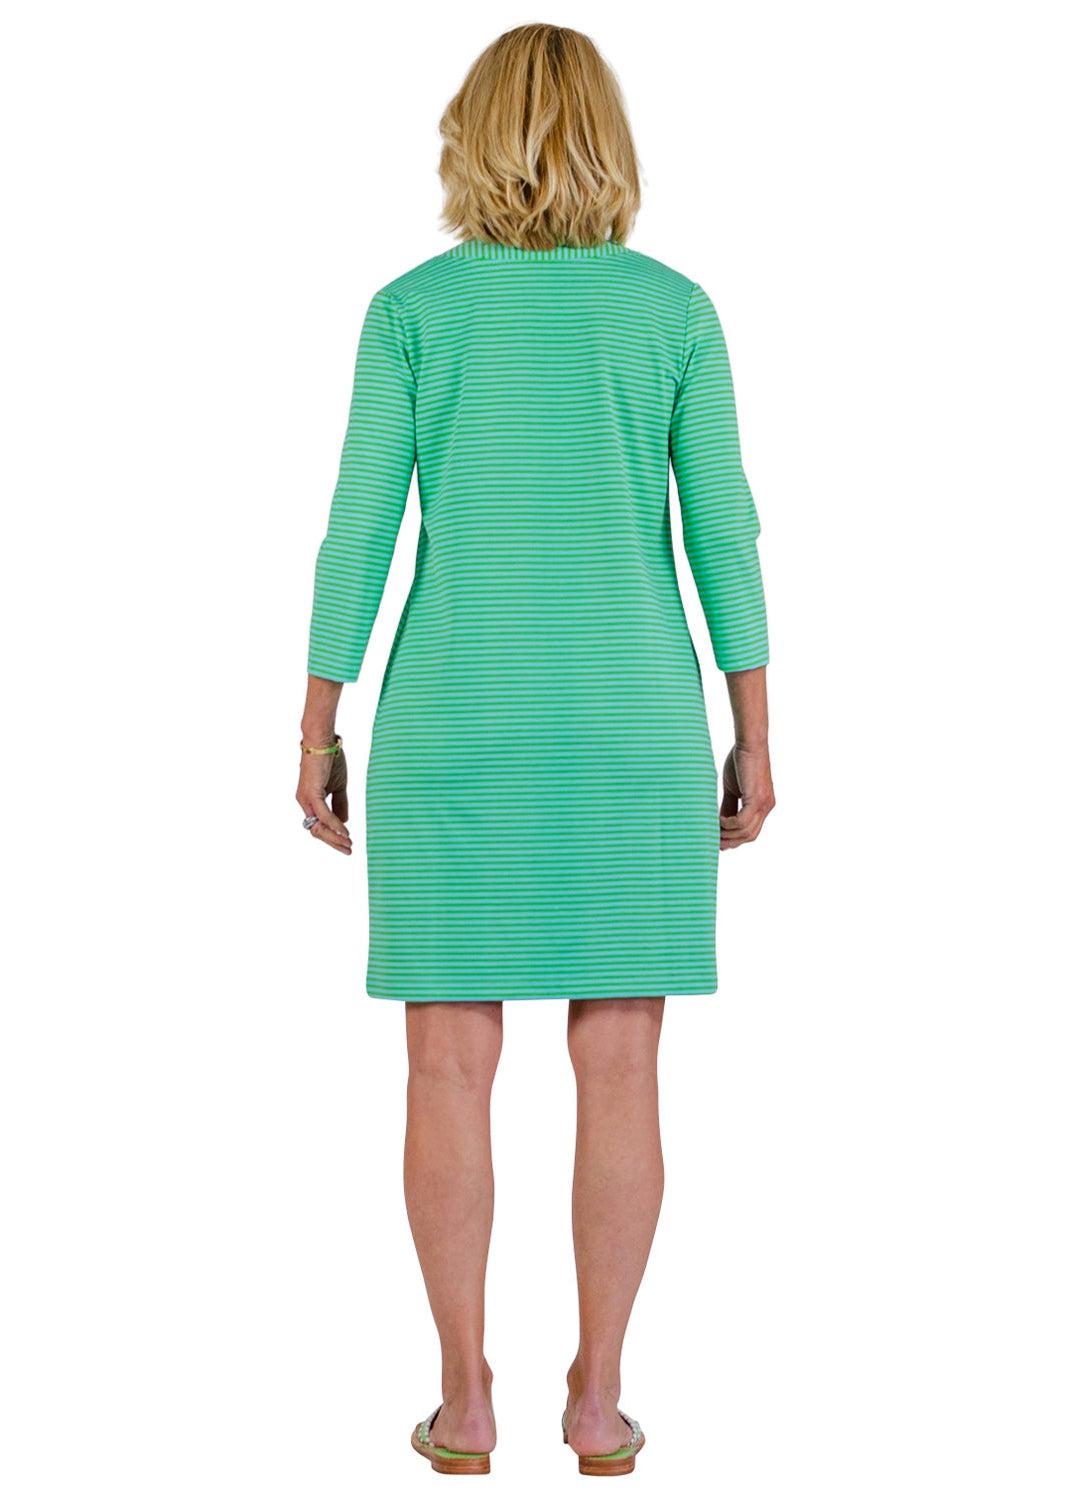 Lucille Dress 3/4 - Juicy Stripe Turq/Green-2